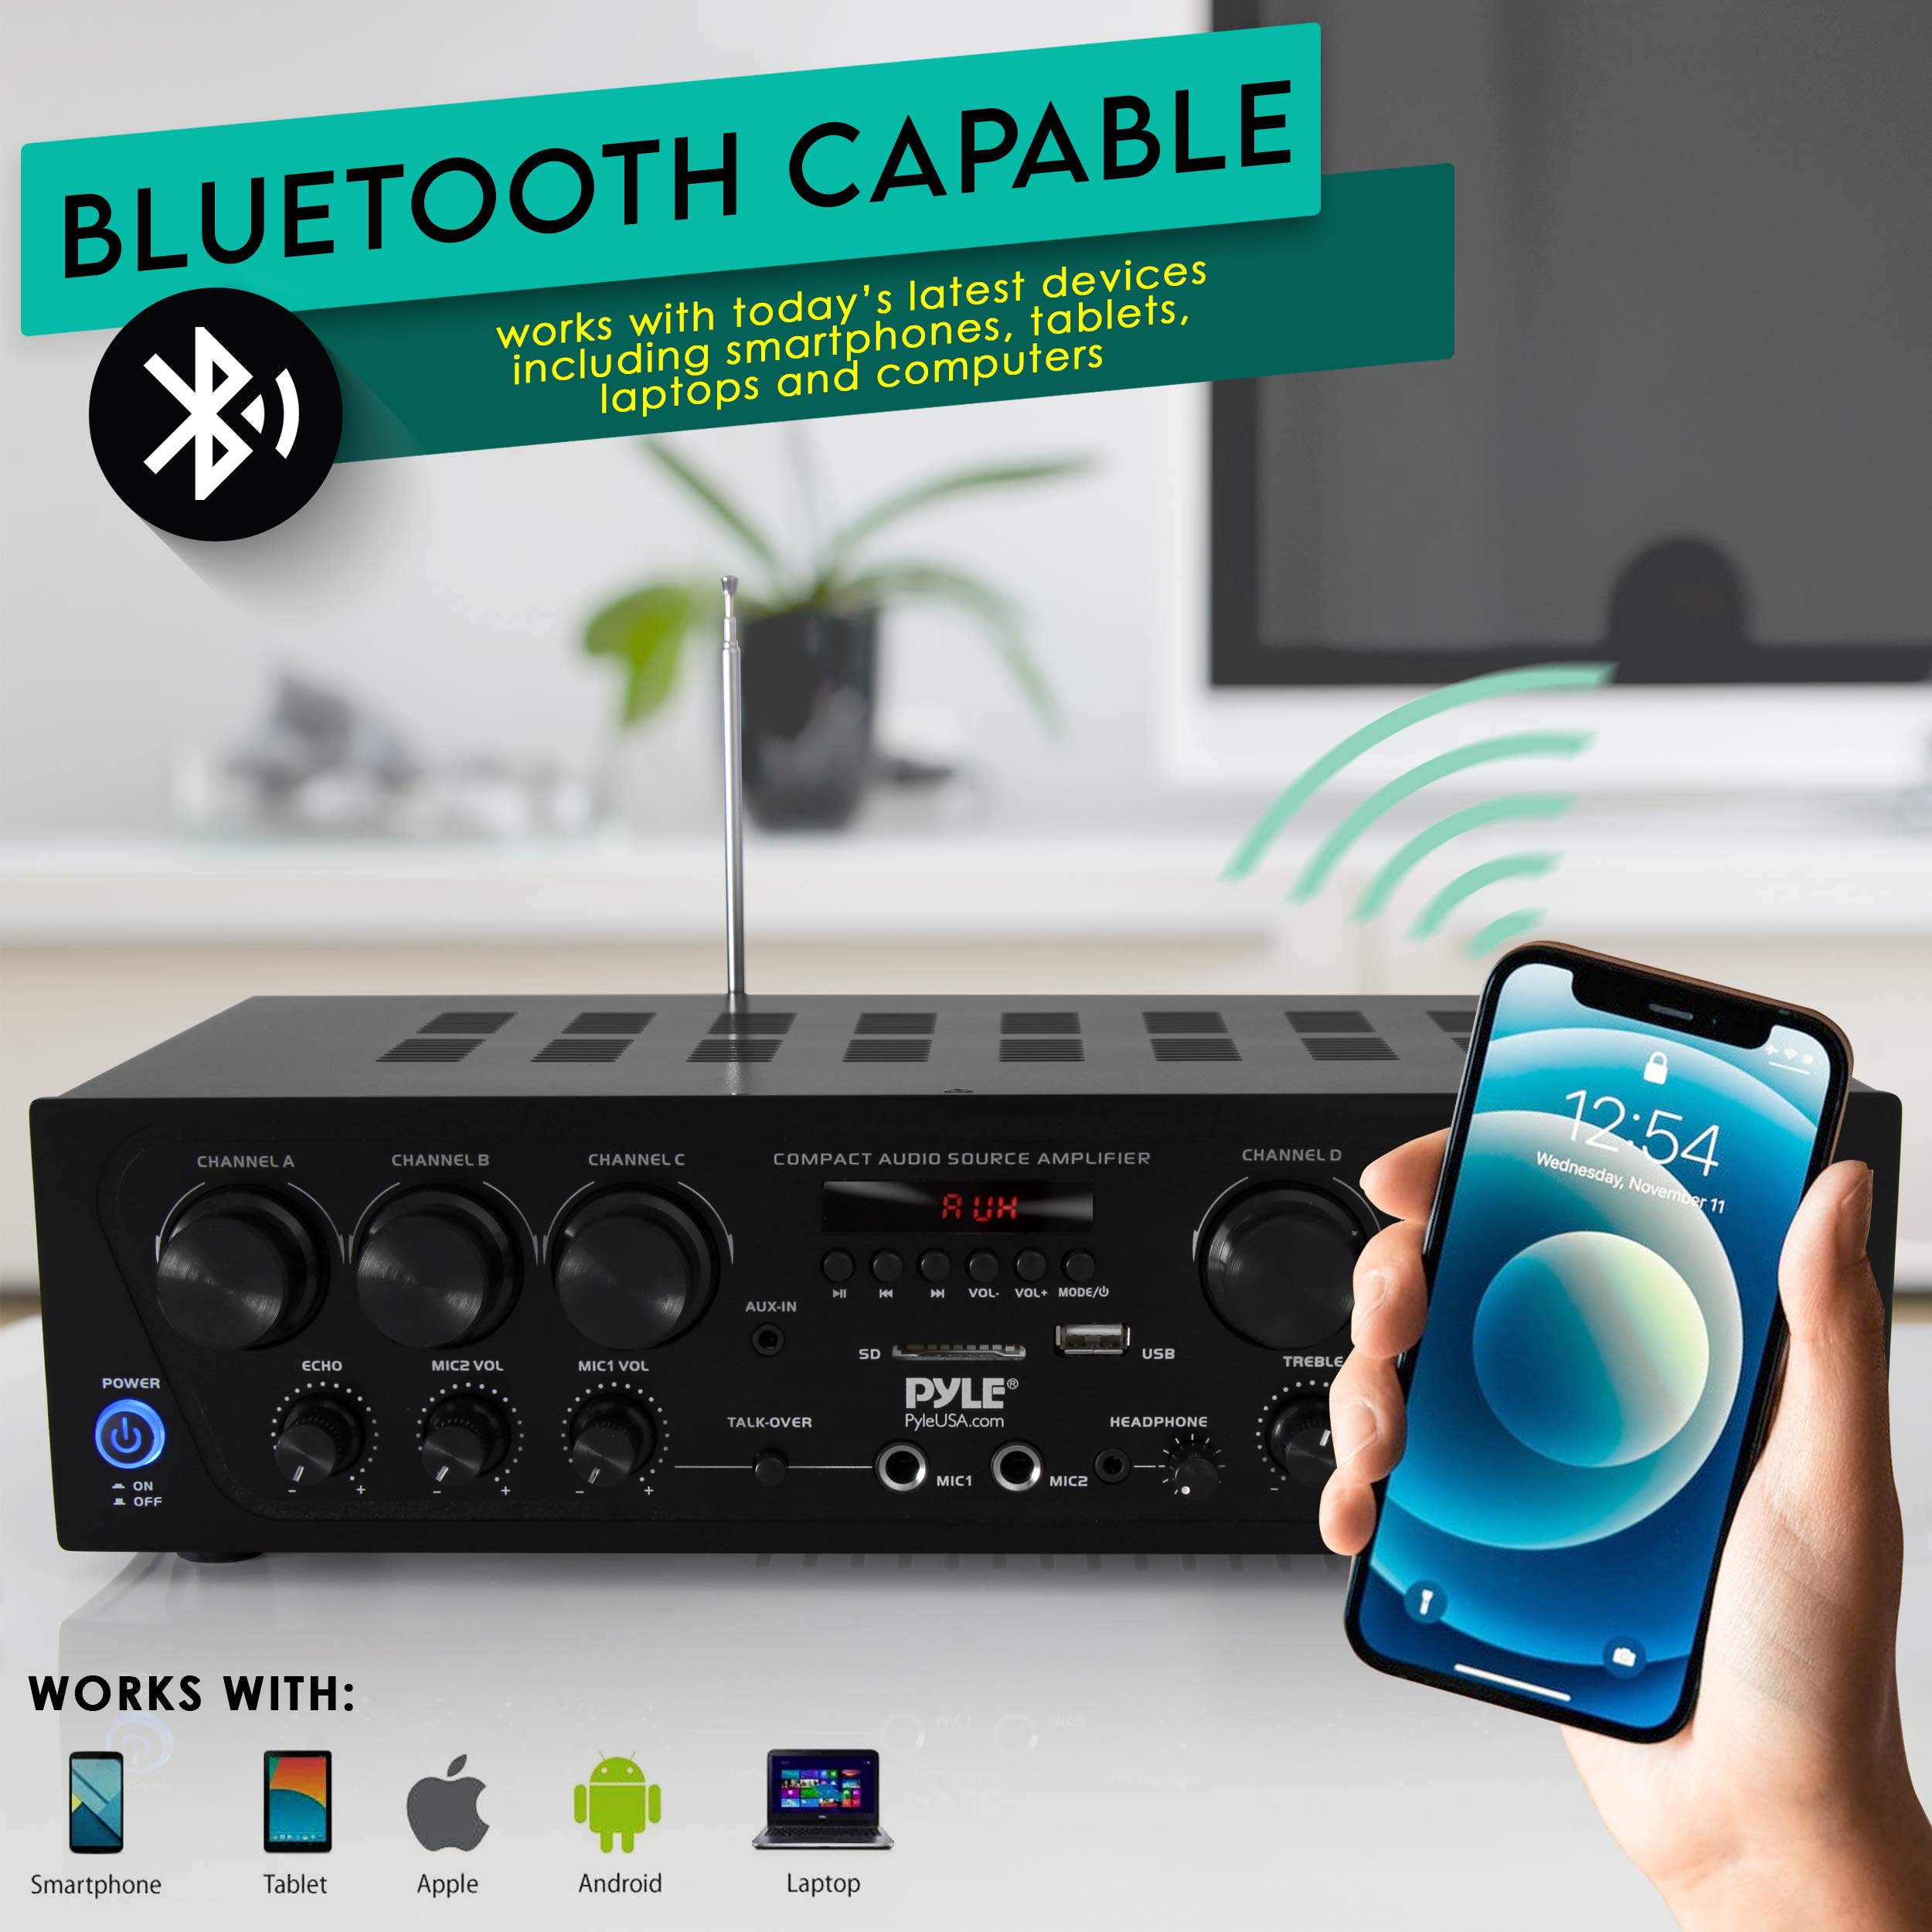 Pyle Wireless Bluetooth Karaoke-6 Channel 750 Watt Home Audio Sound Power Stereo Receiver Amplifier w/USB, Headphone, 2 Microphone Input w/Echo, Talkover for PA PTA62BT, AUX, Black